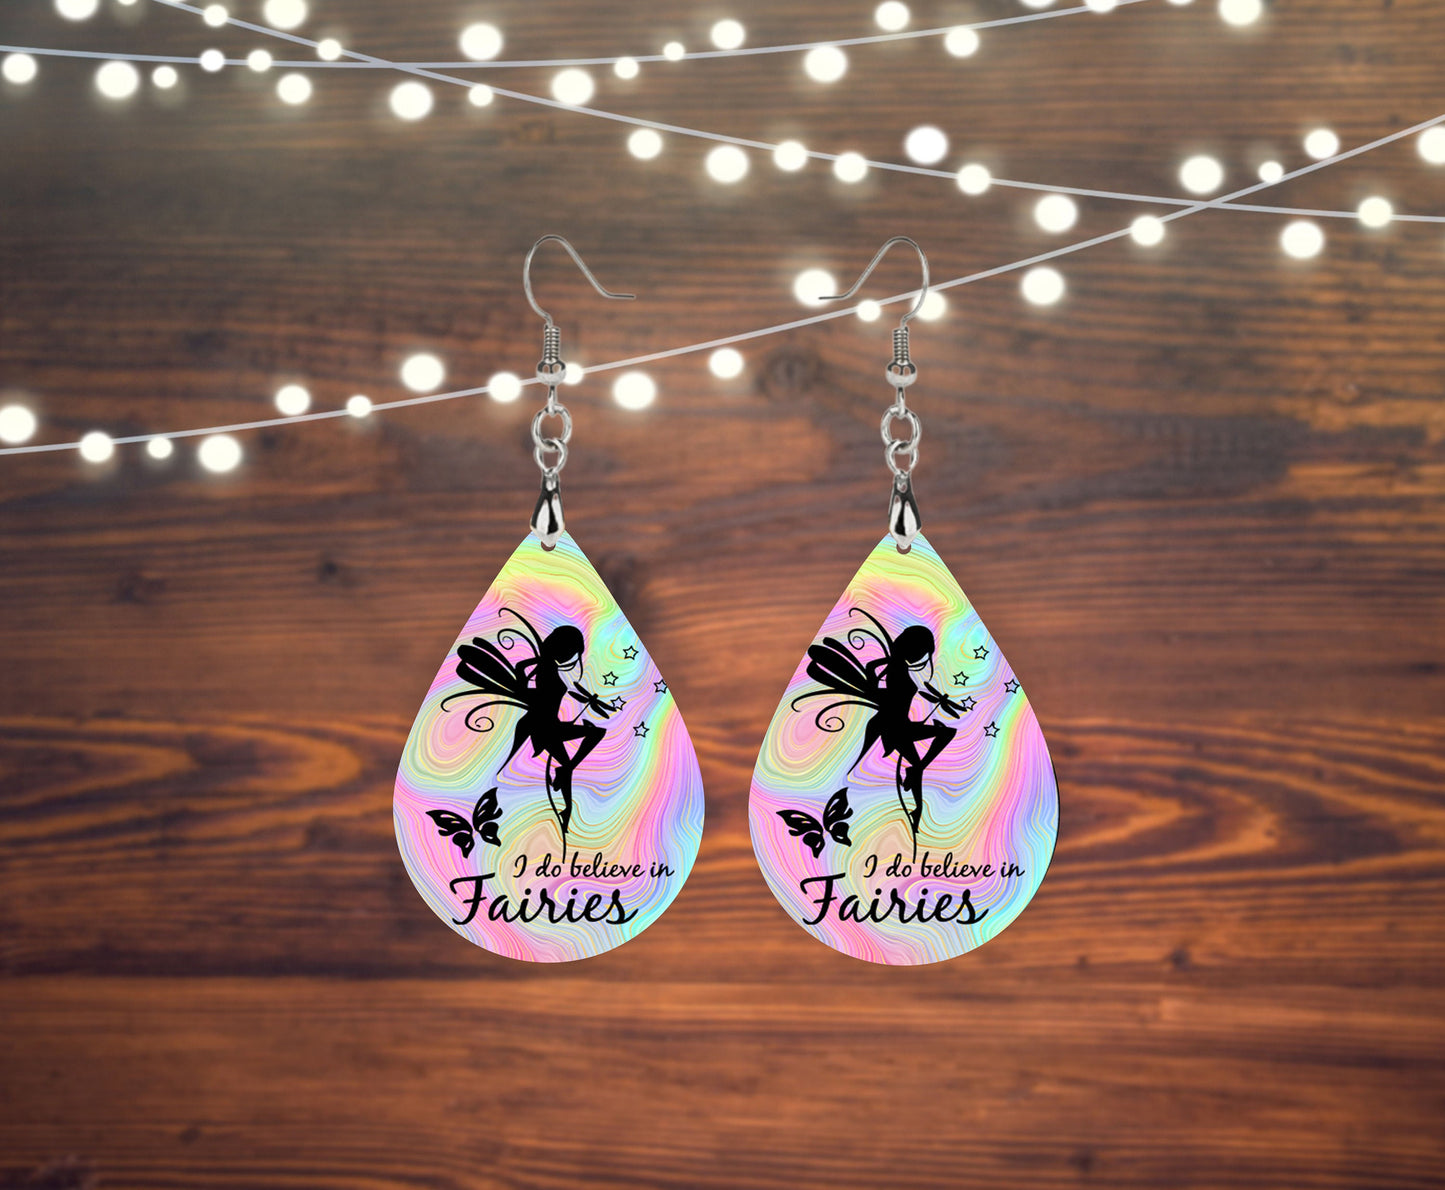 I Do Believe in Fairies Tear Drop Dangle Printed Earrings Jewelry Handmade